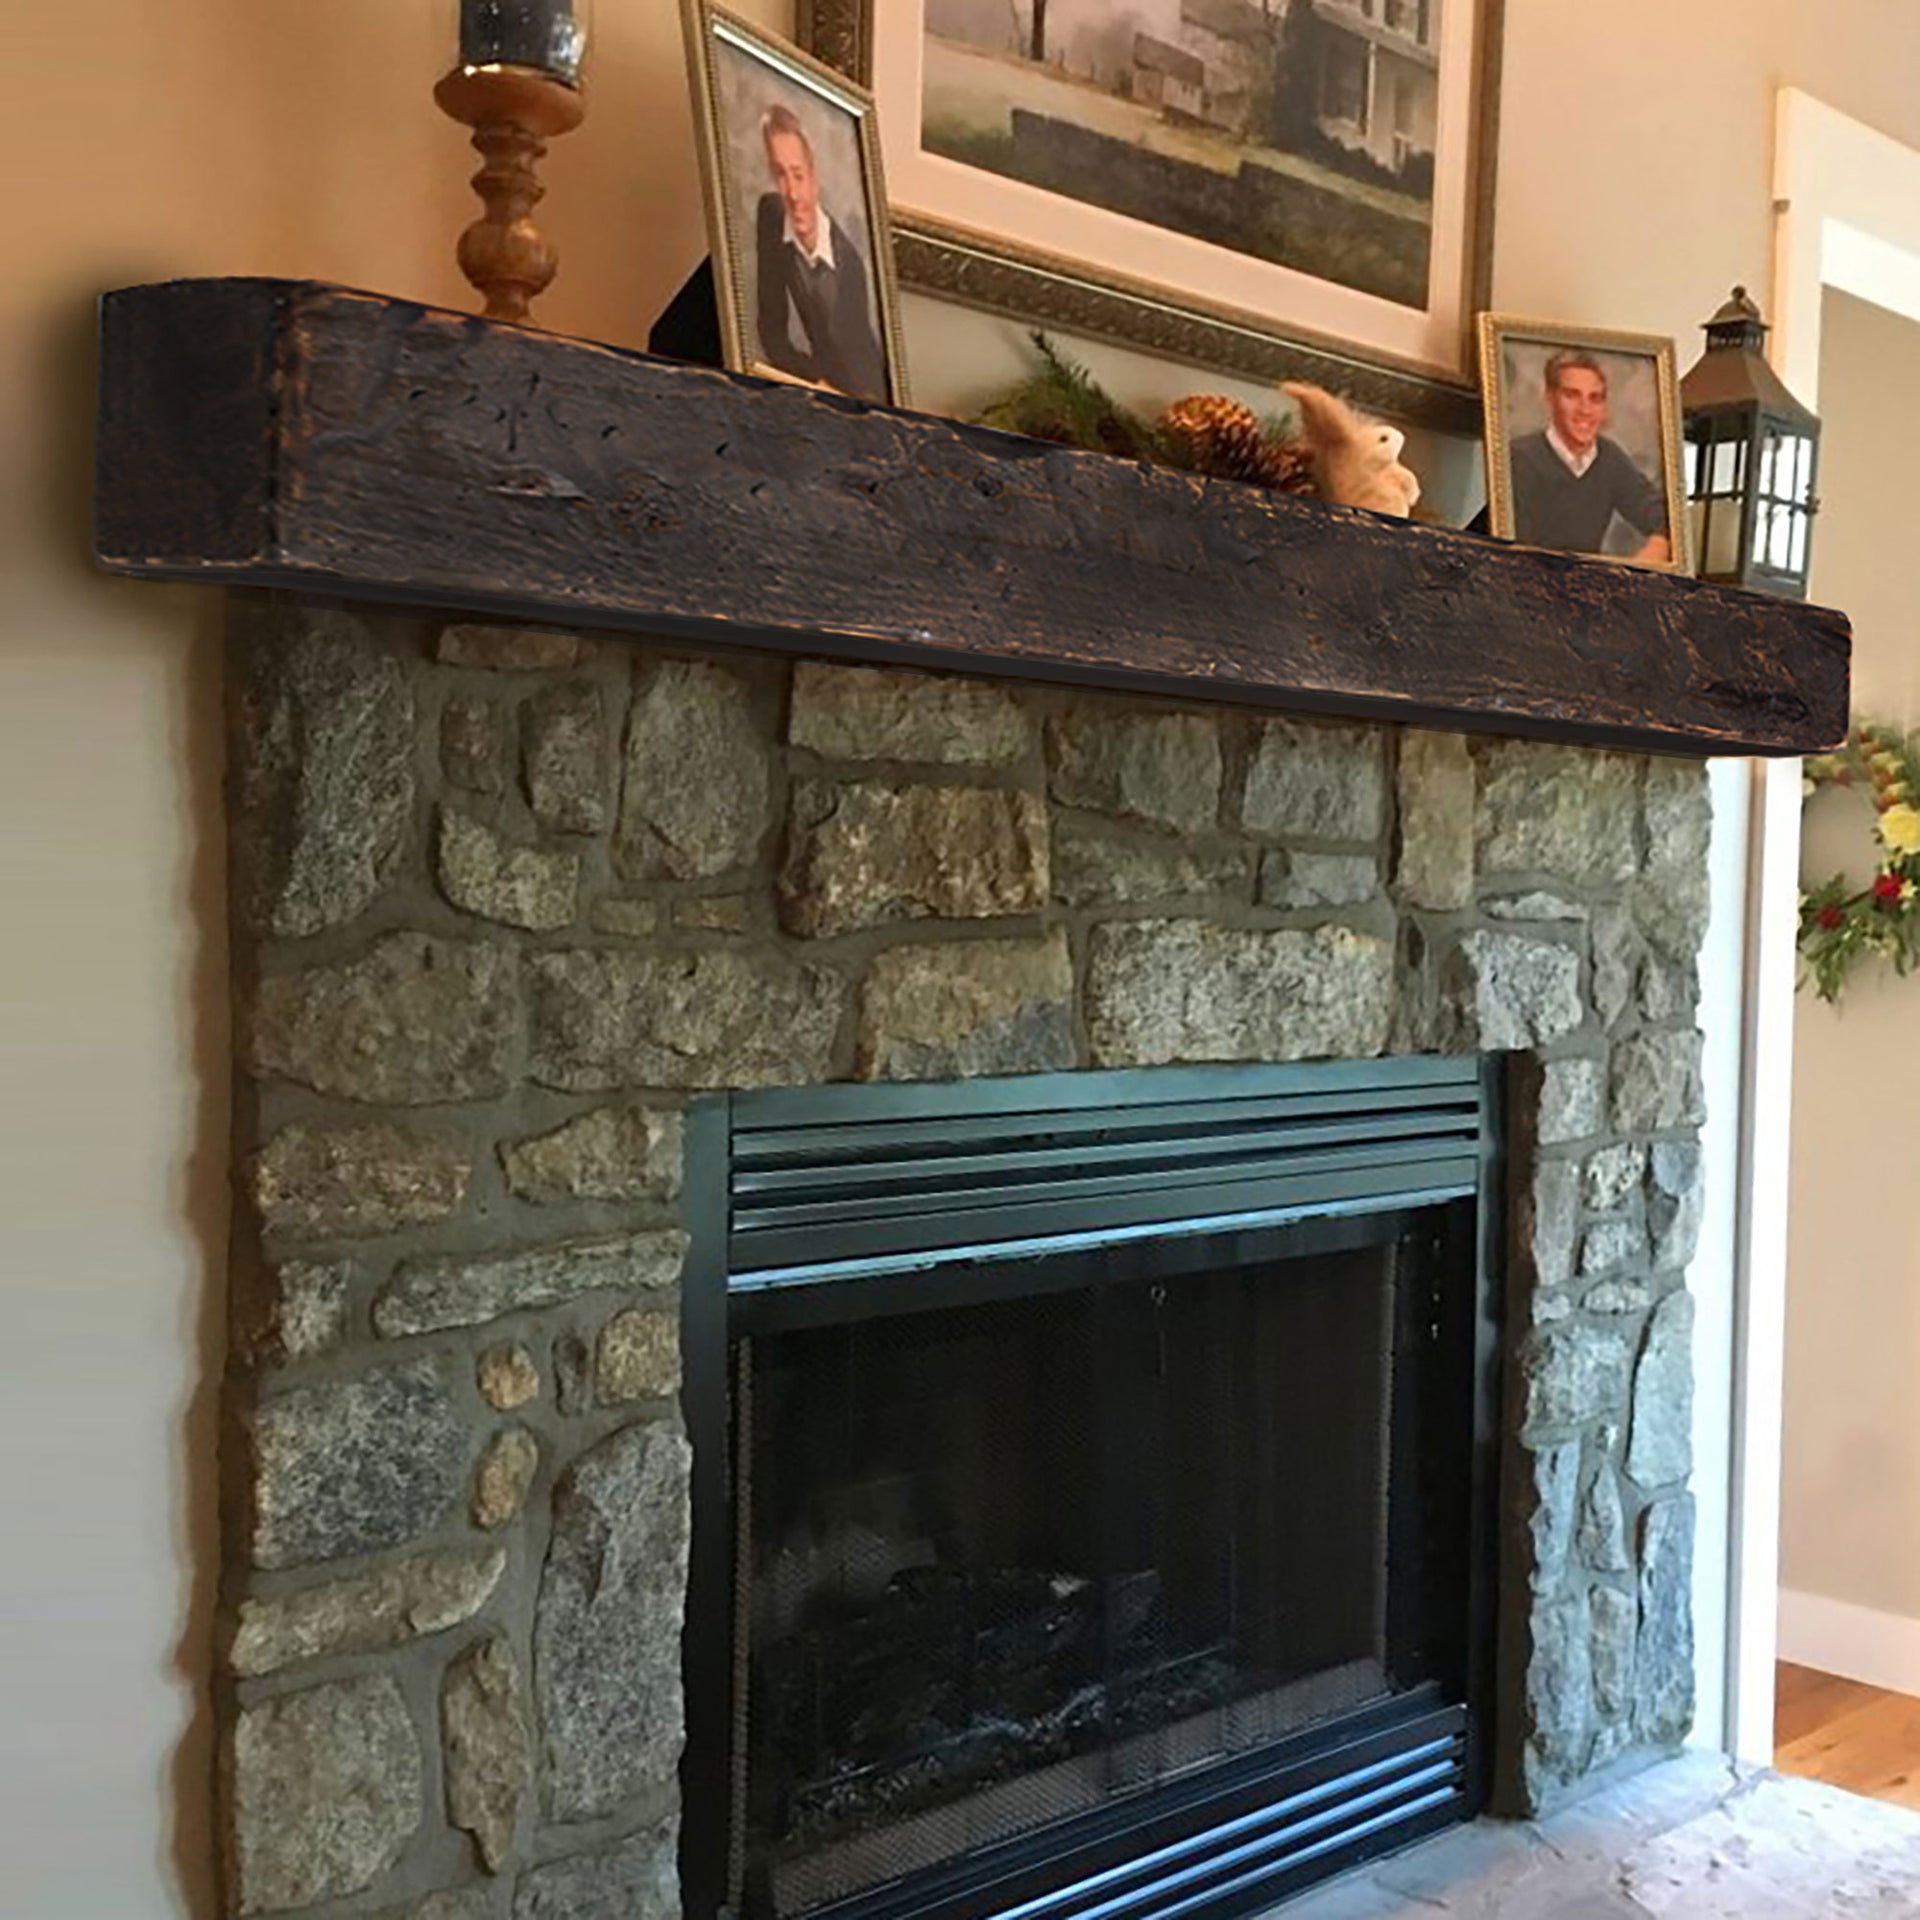 A walnut rustic mantel sitting on a rustic stone fireplace